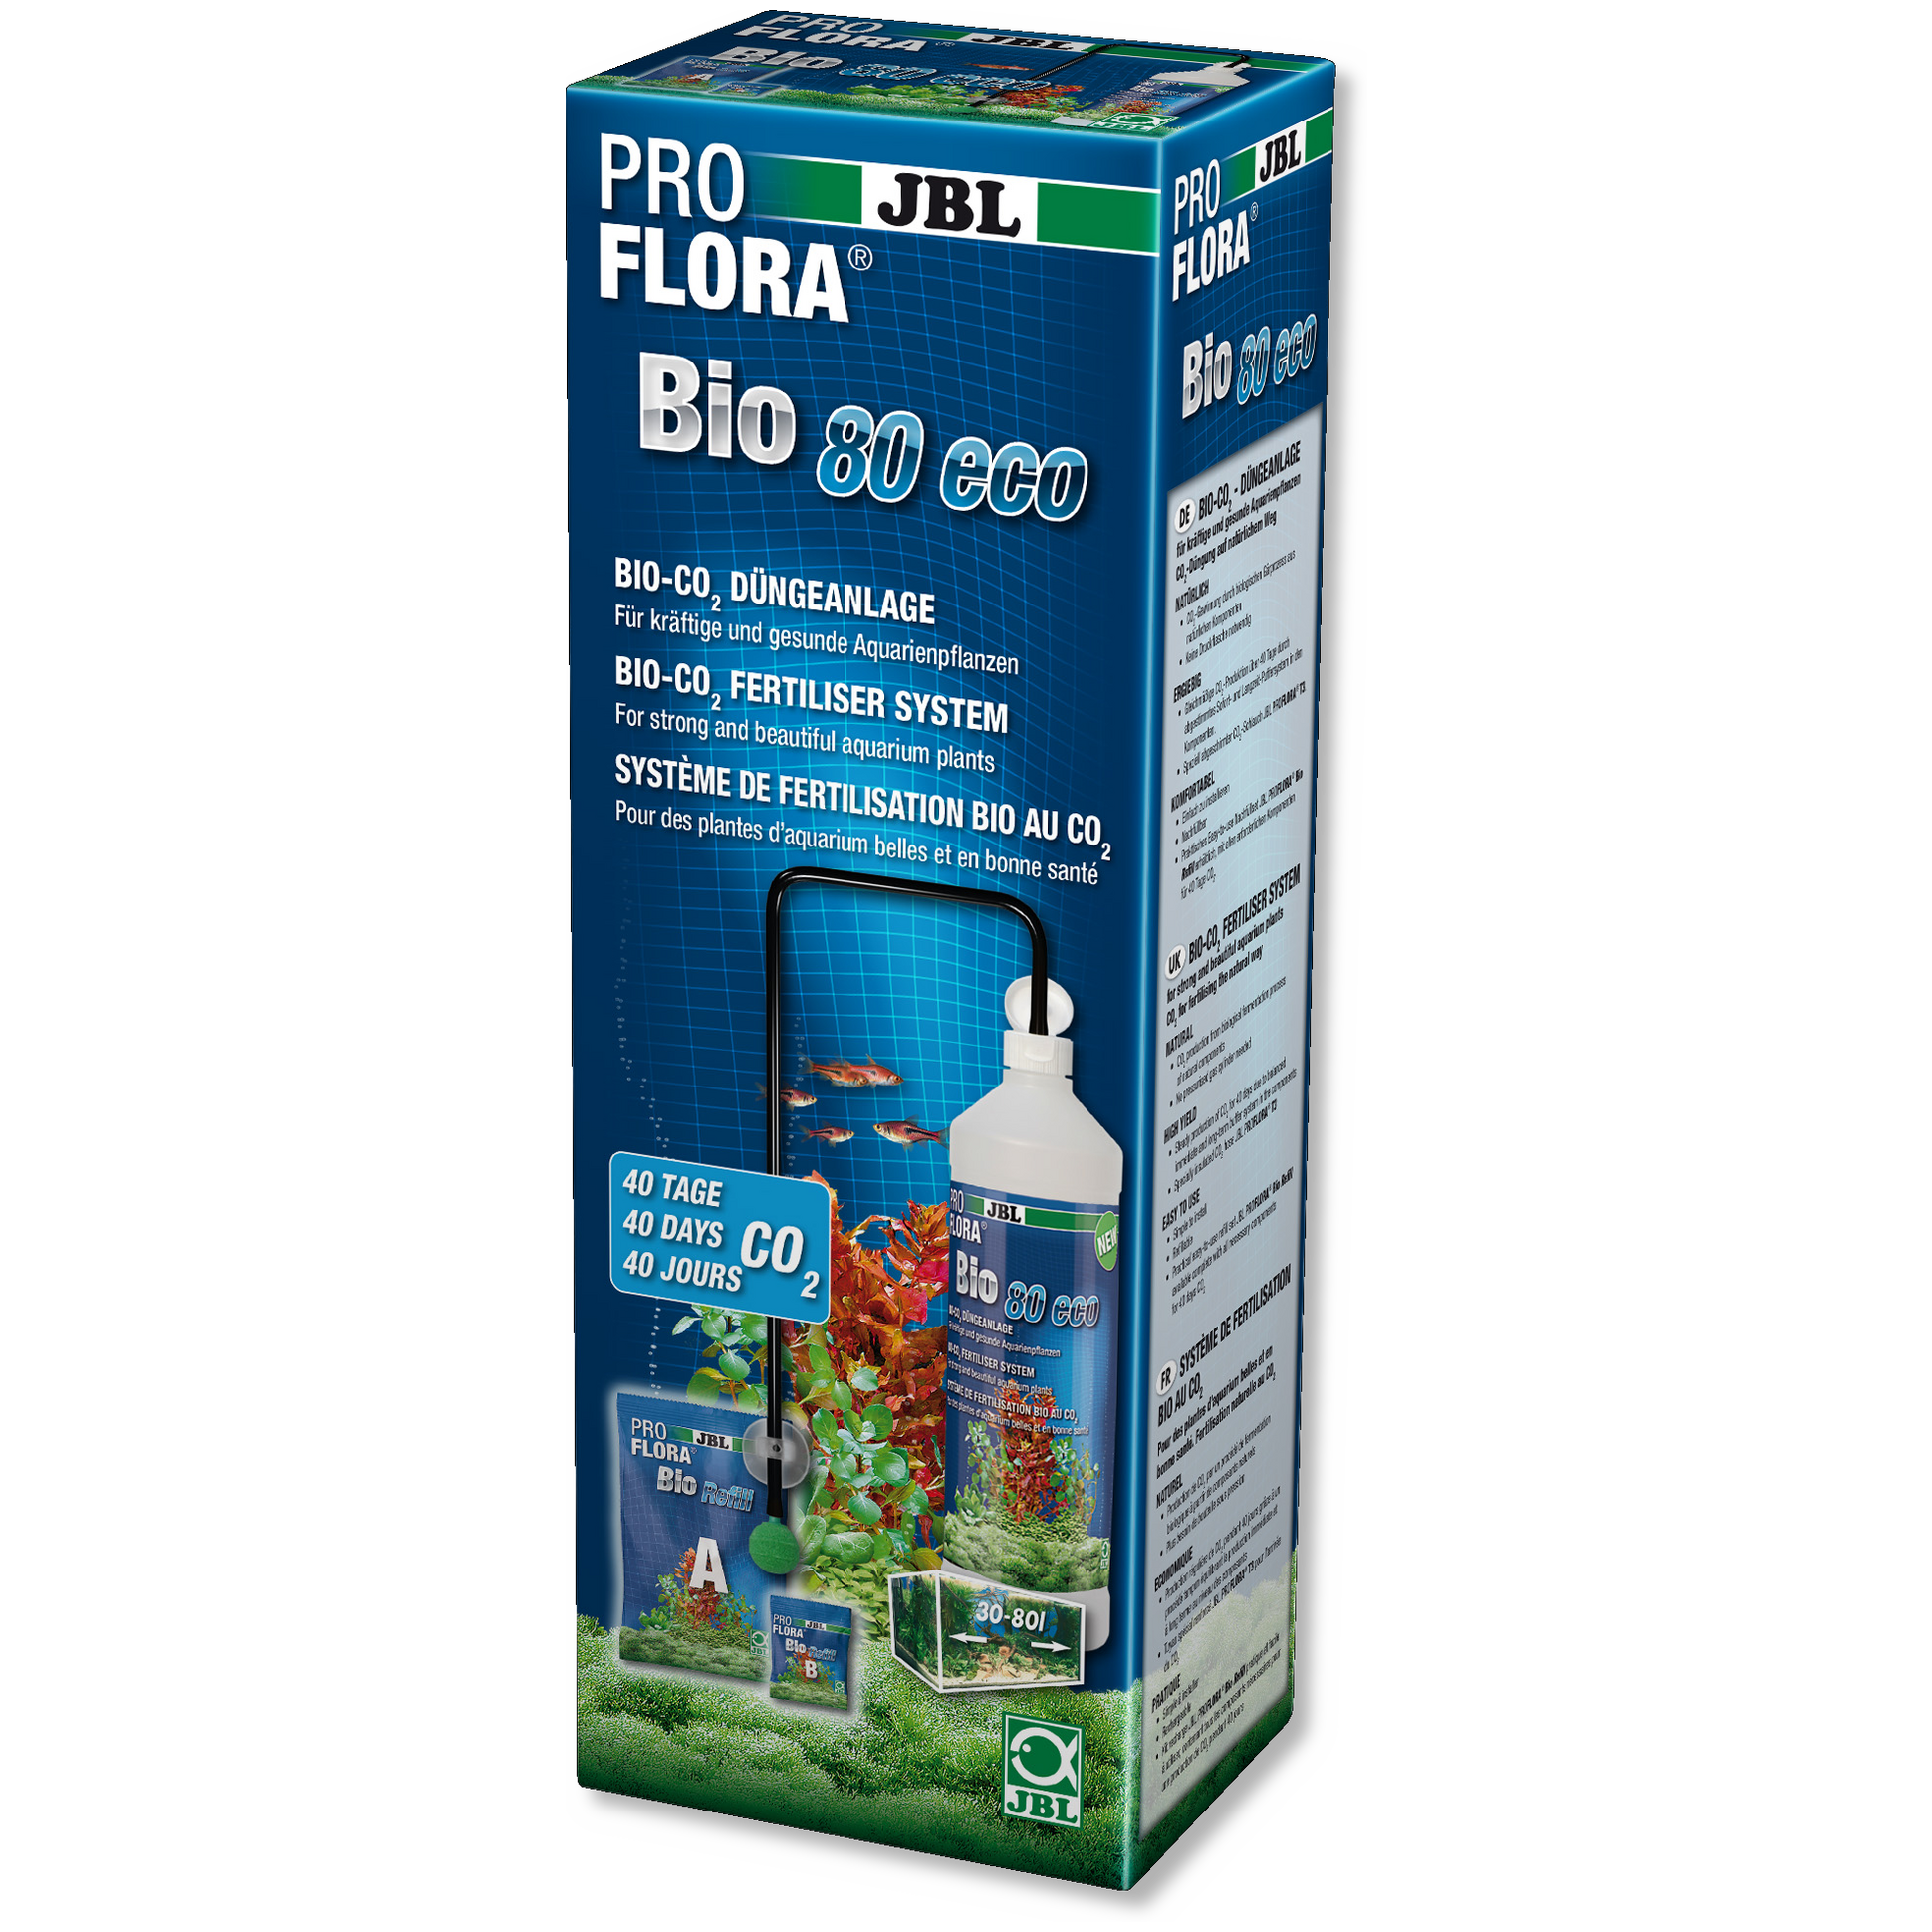 JBL PROFLORA Bio80 eco Bio-CO2 fertiliser system